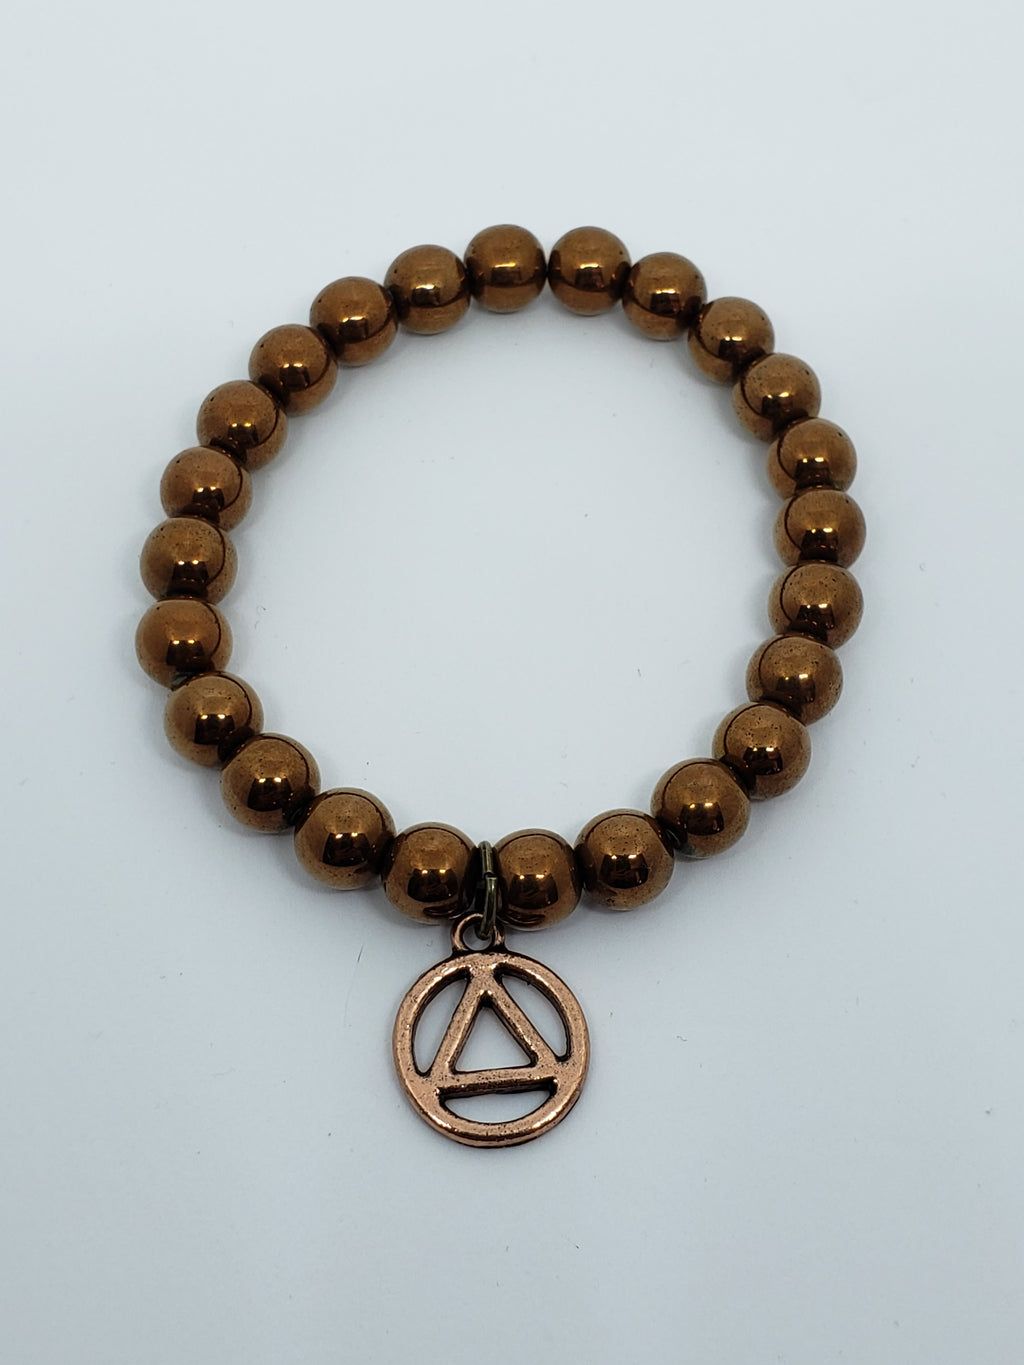 Hematite Antique Copper Colour Round Bead Stretch Bracelet with AA Charm